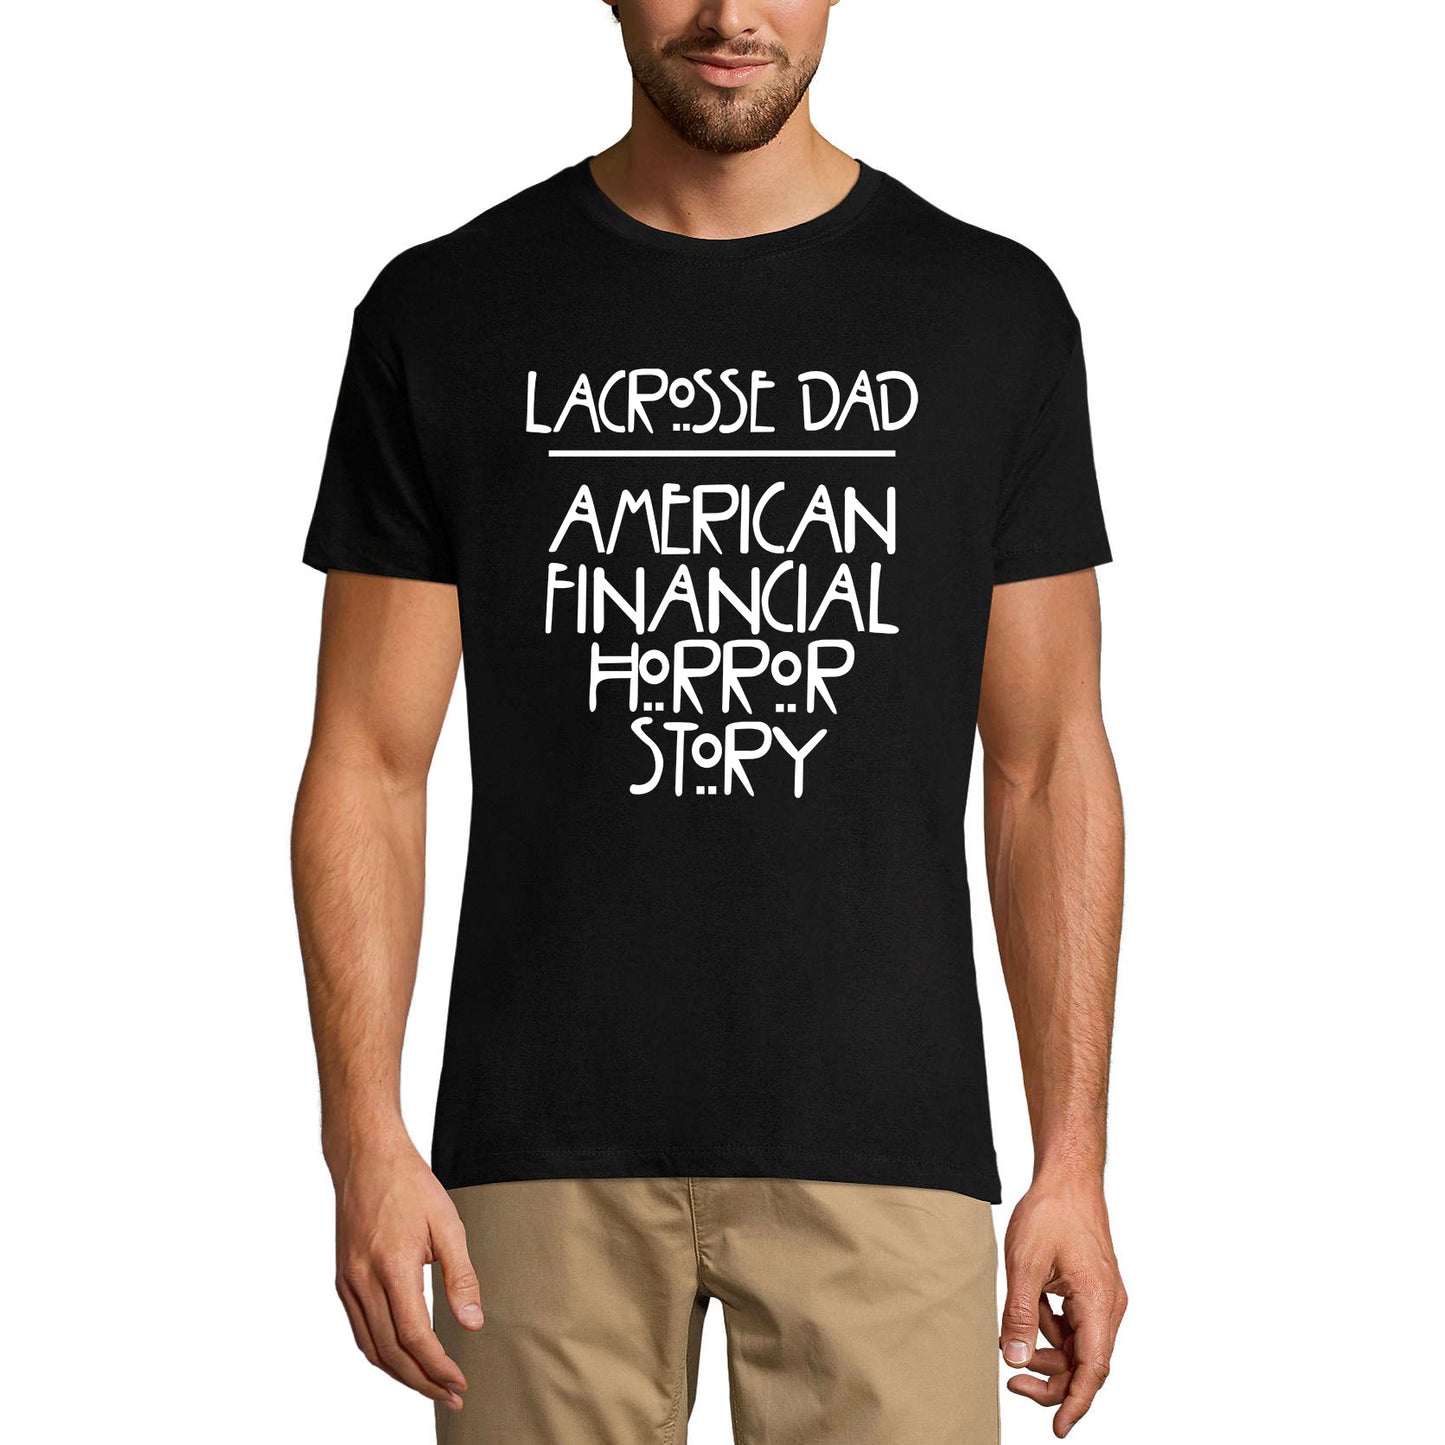 ULTRABASIC Men's Graphic T-Shirt Lacrosse Dad - American Financial Horror Story